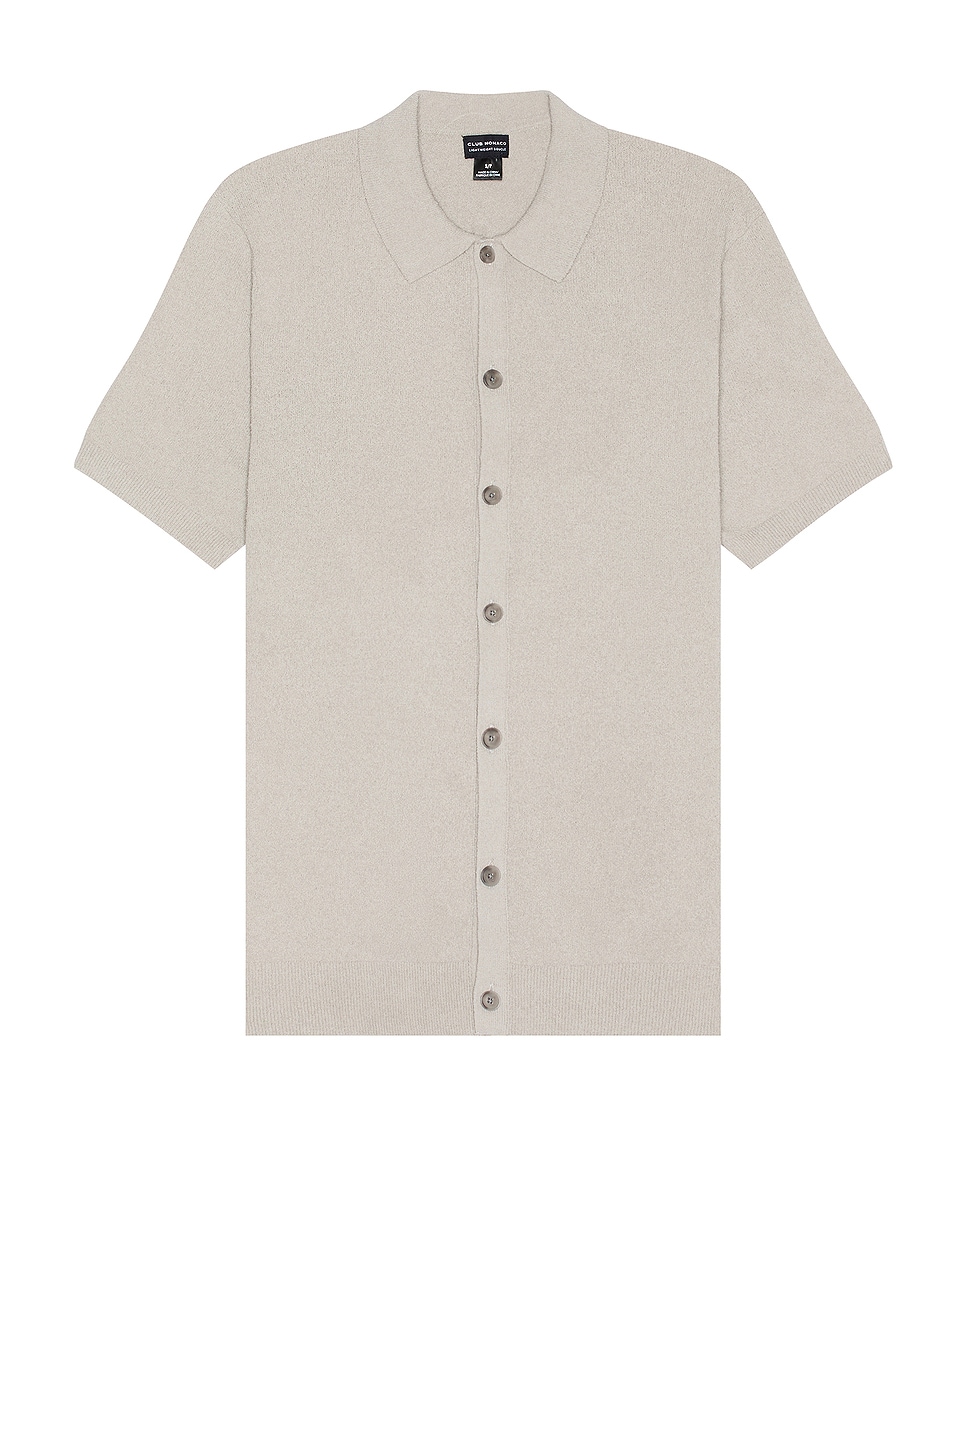 Short Sleeve Micro Boucle Shirt in Grey